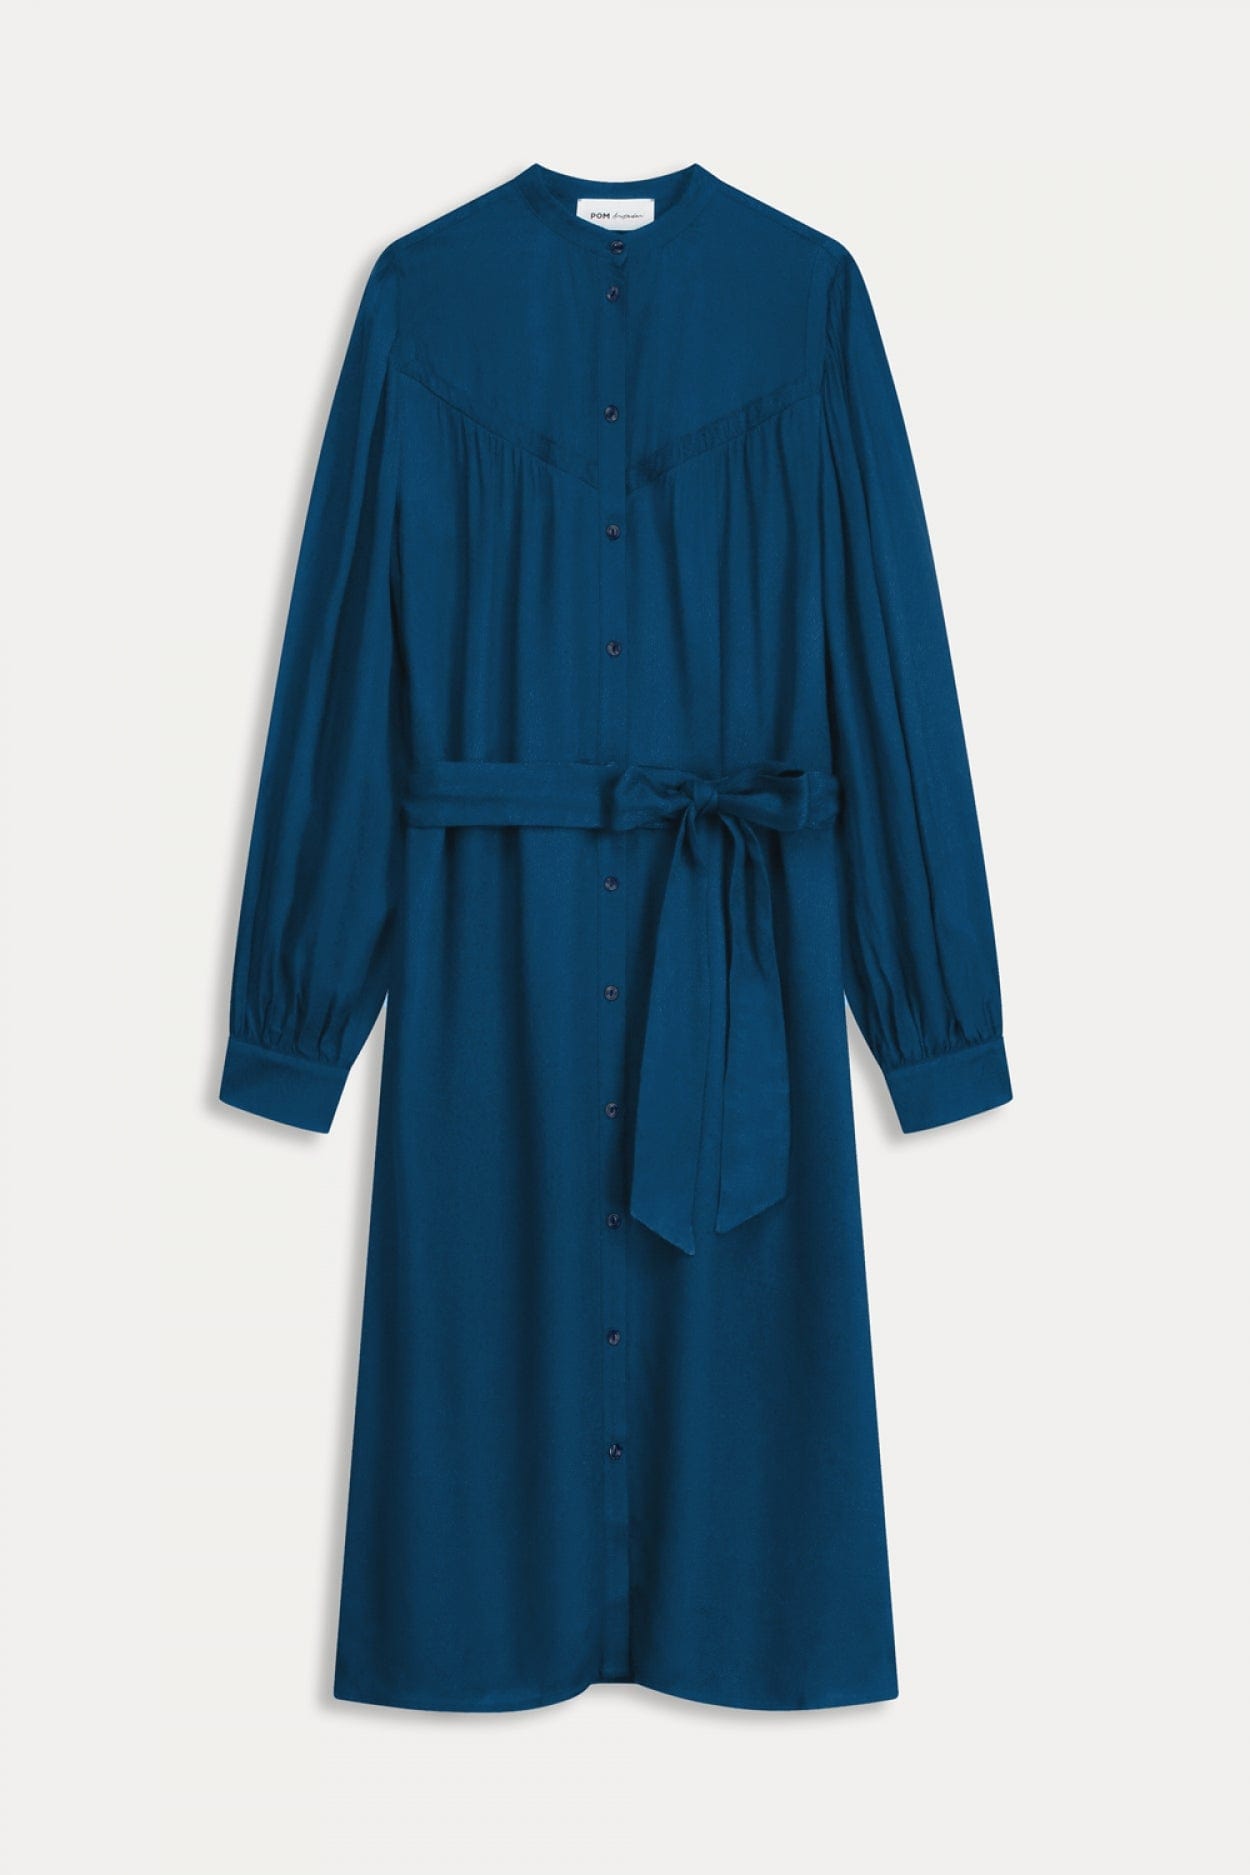 POM Amsterdam Dresses DRESS - Eternal Blue